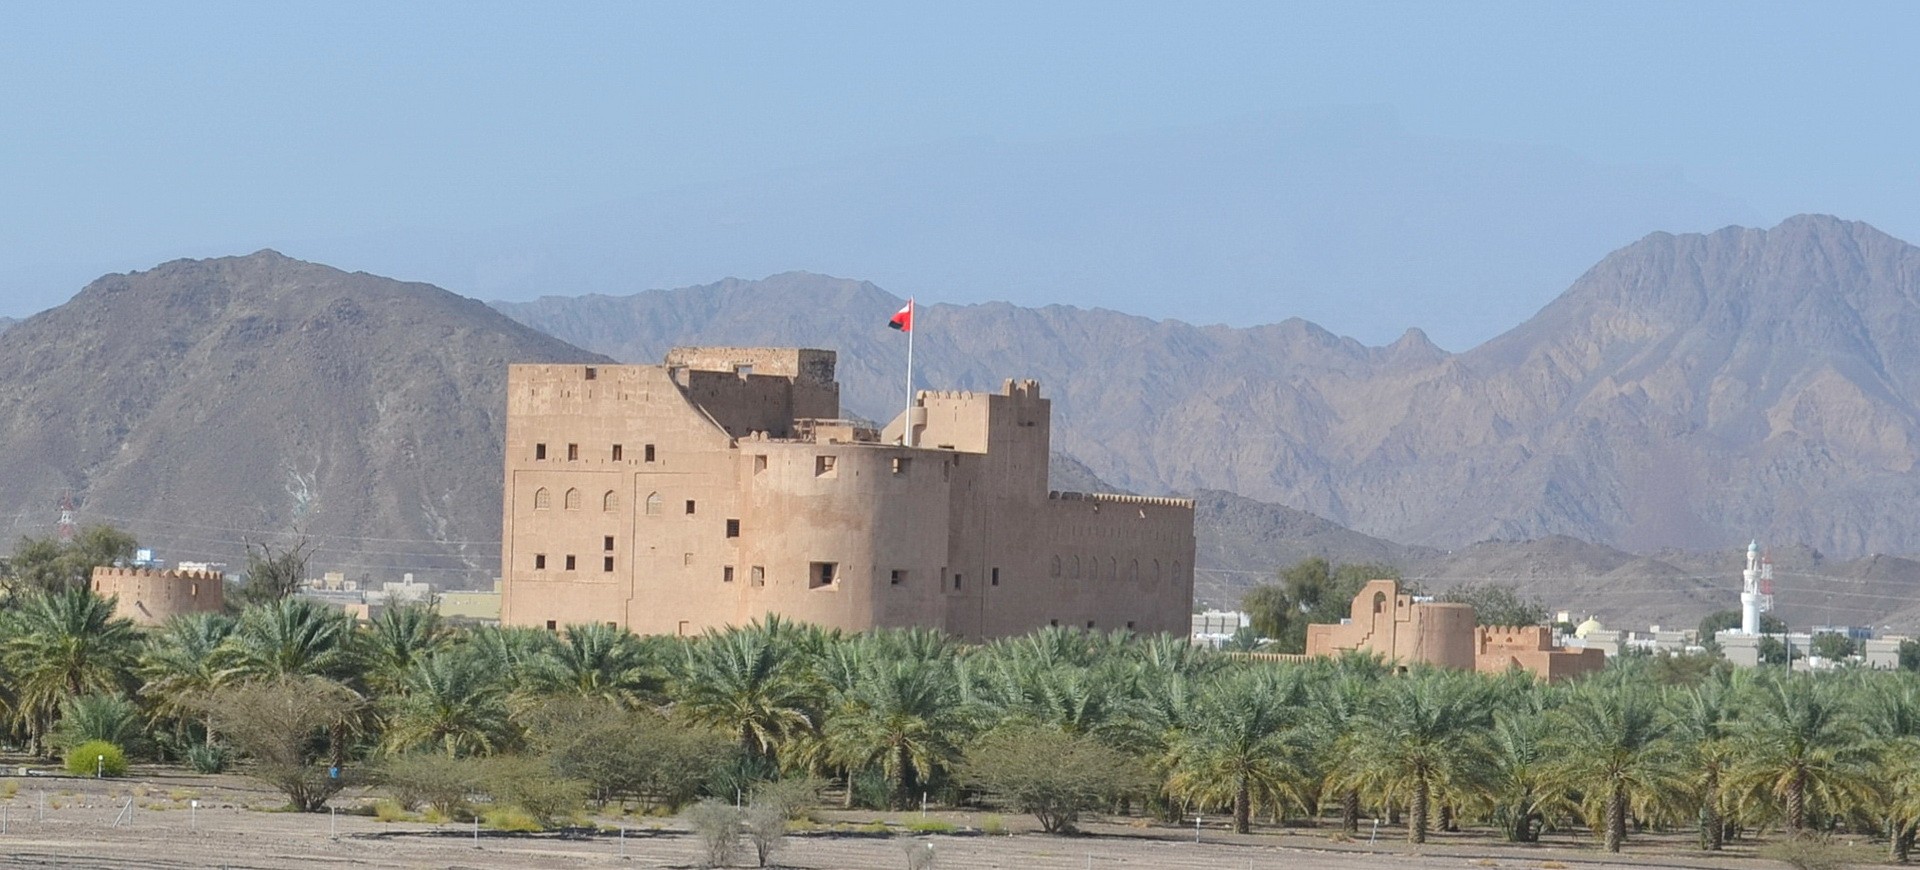 Oman Al Dakhiliyah Fort Jabreen by ZB